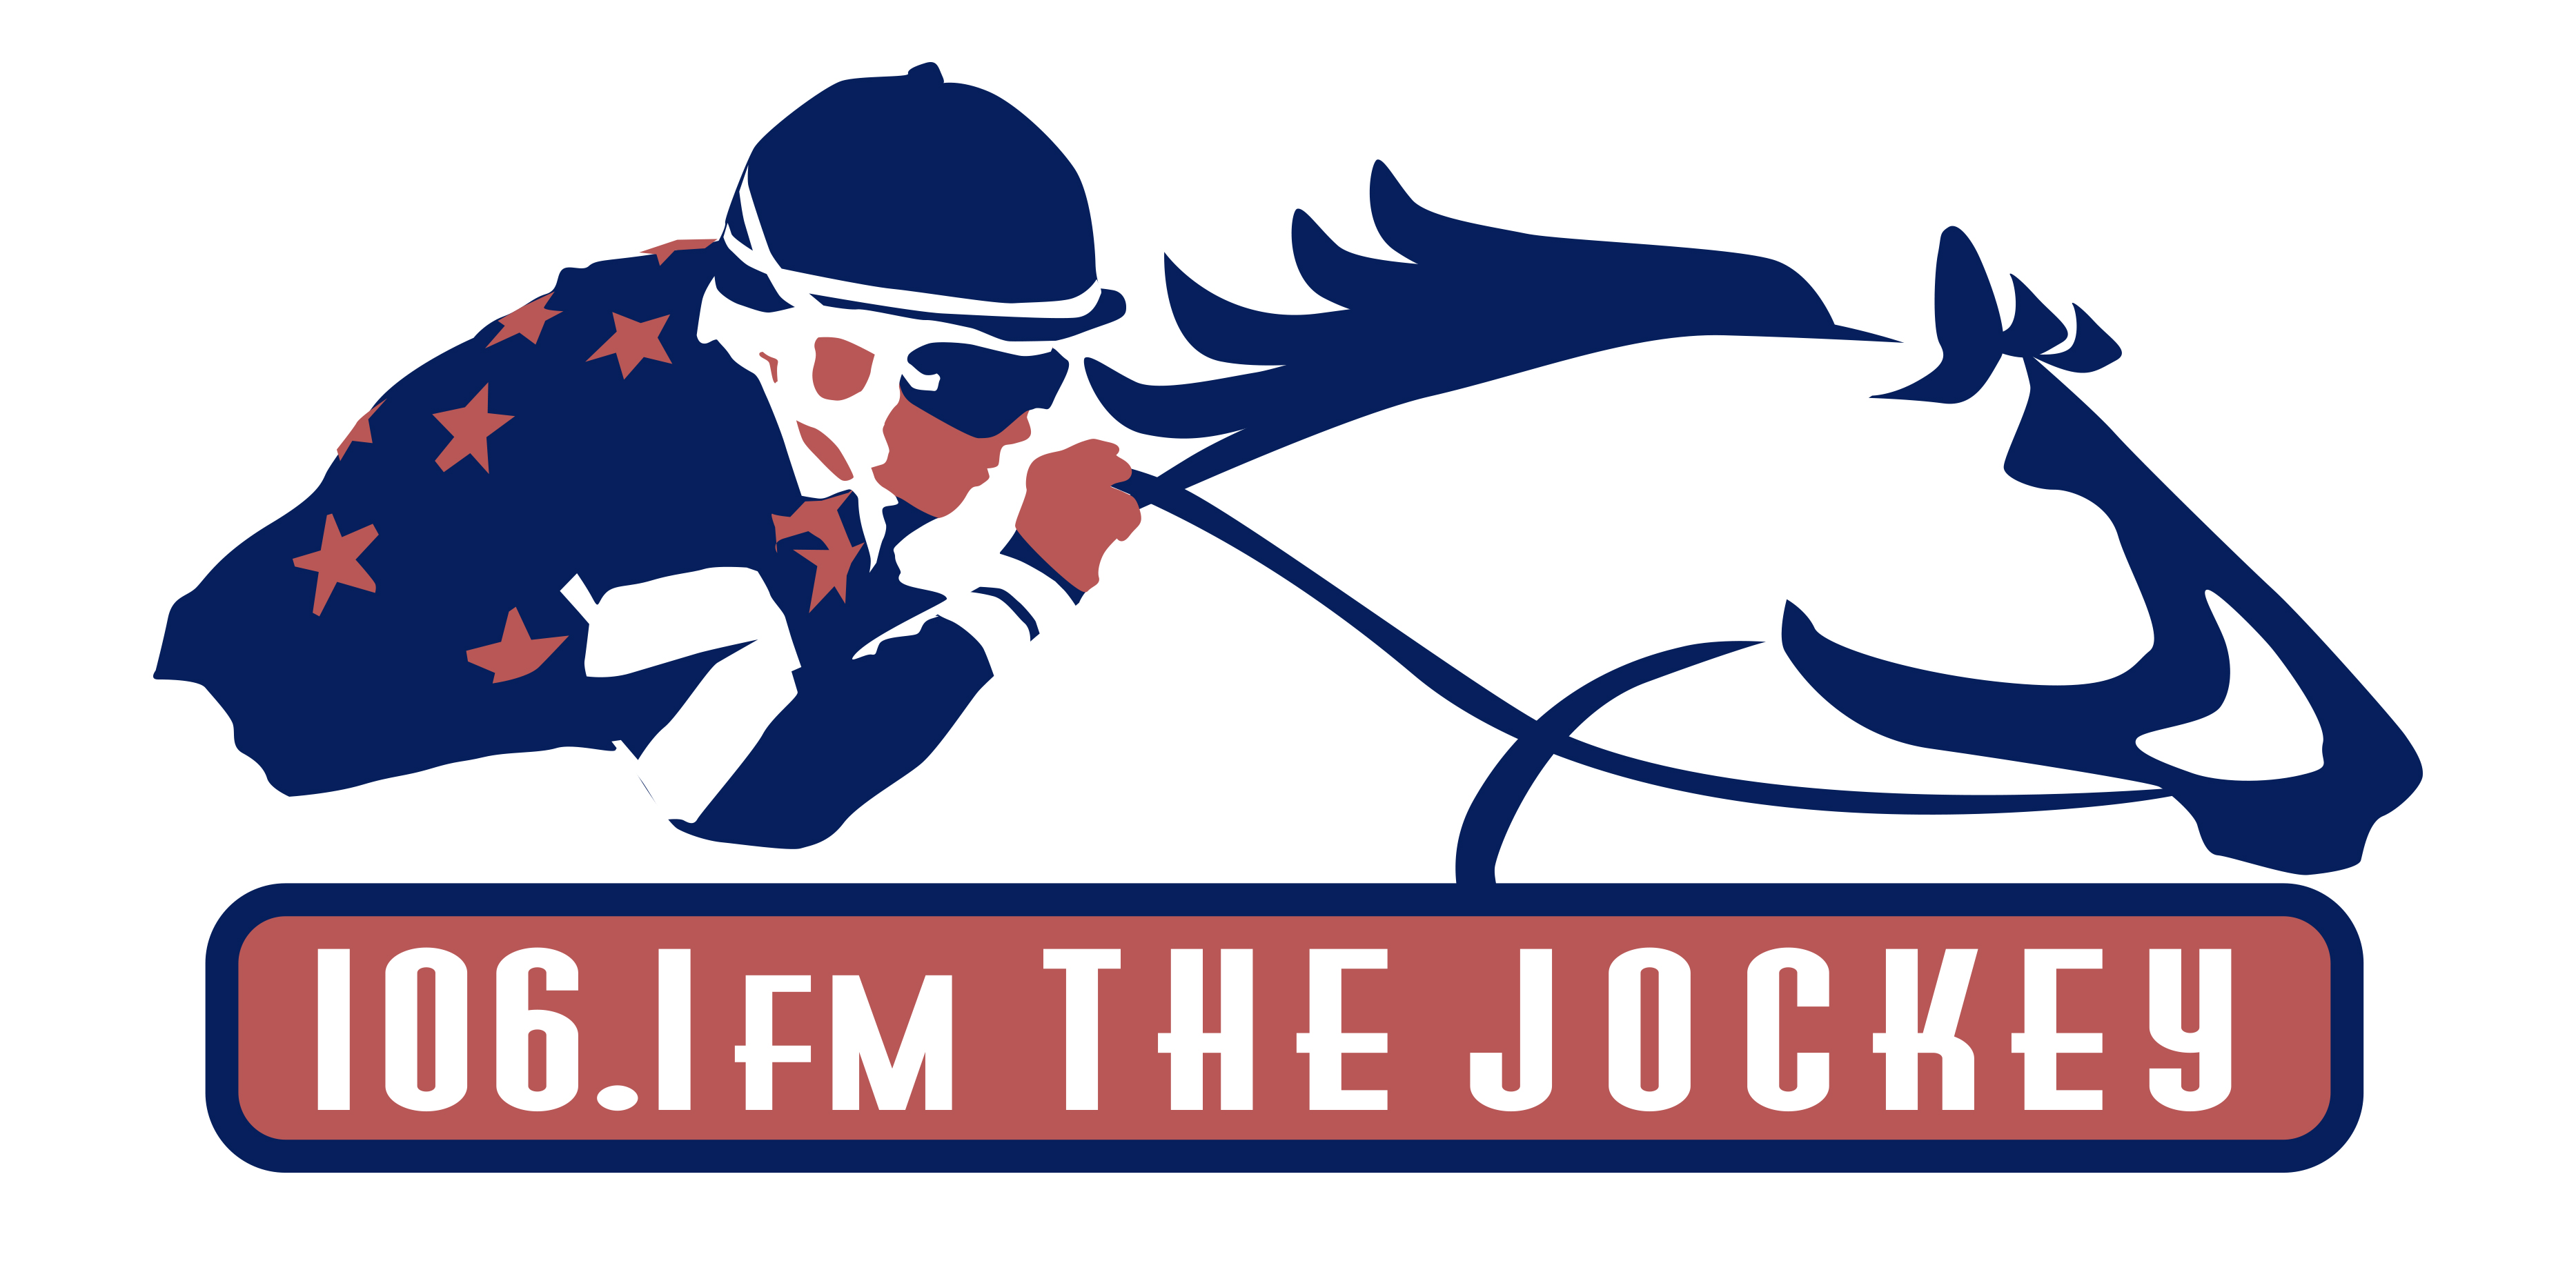 106.1FM The Jockey